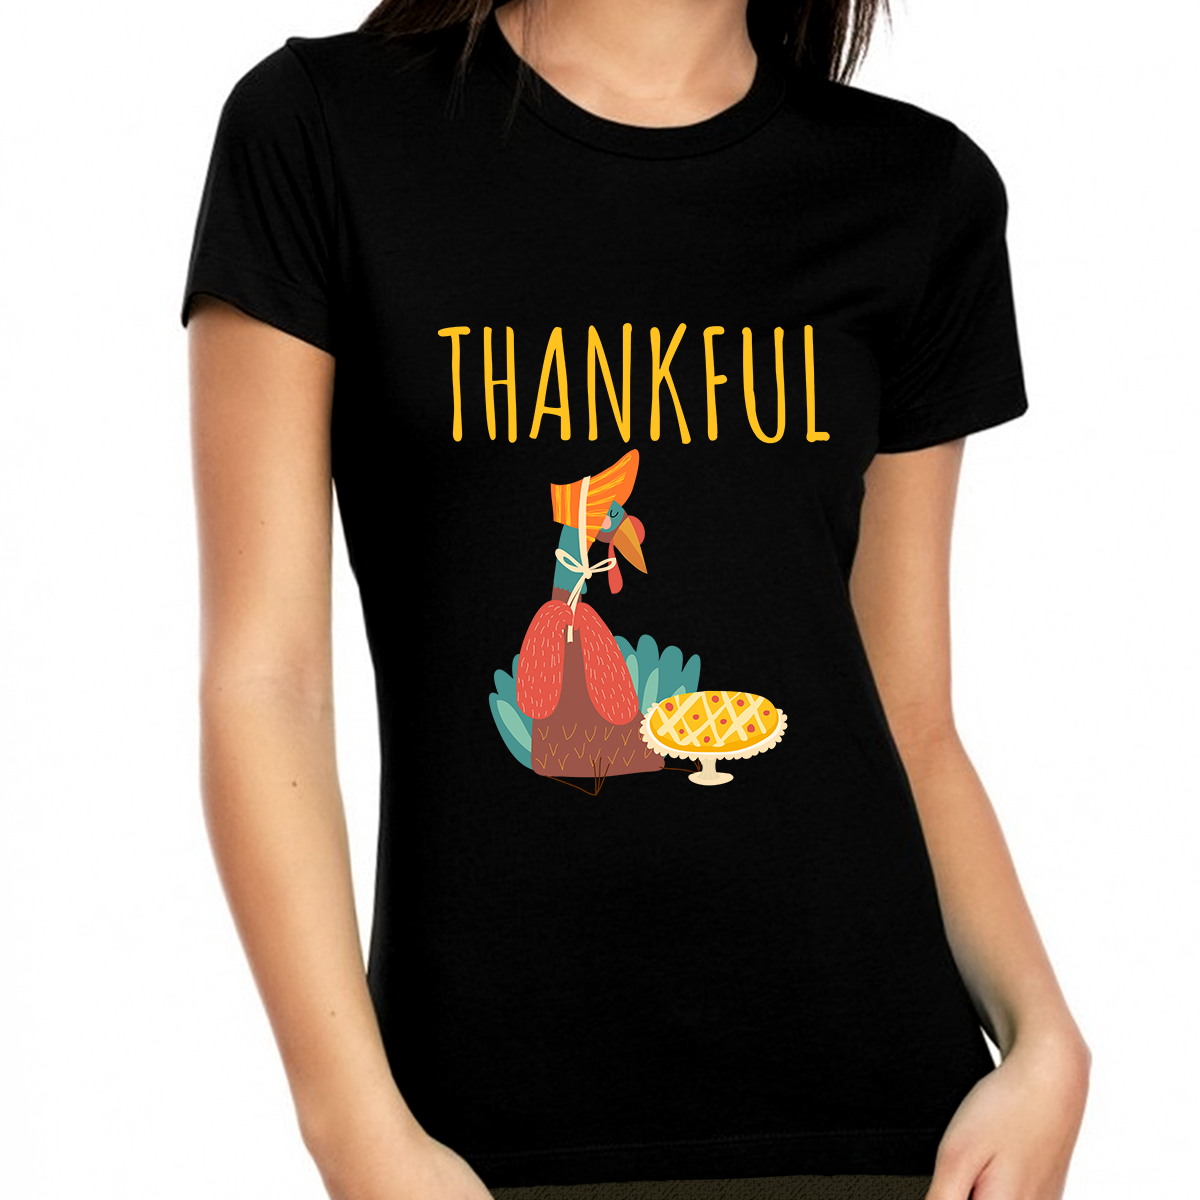 Funny Thanksgiving Shirt Turkey Shirt Thanksgiving Gifts Cute Fall Shirts Women Thankful Shirts for Women